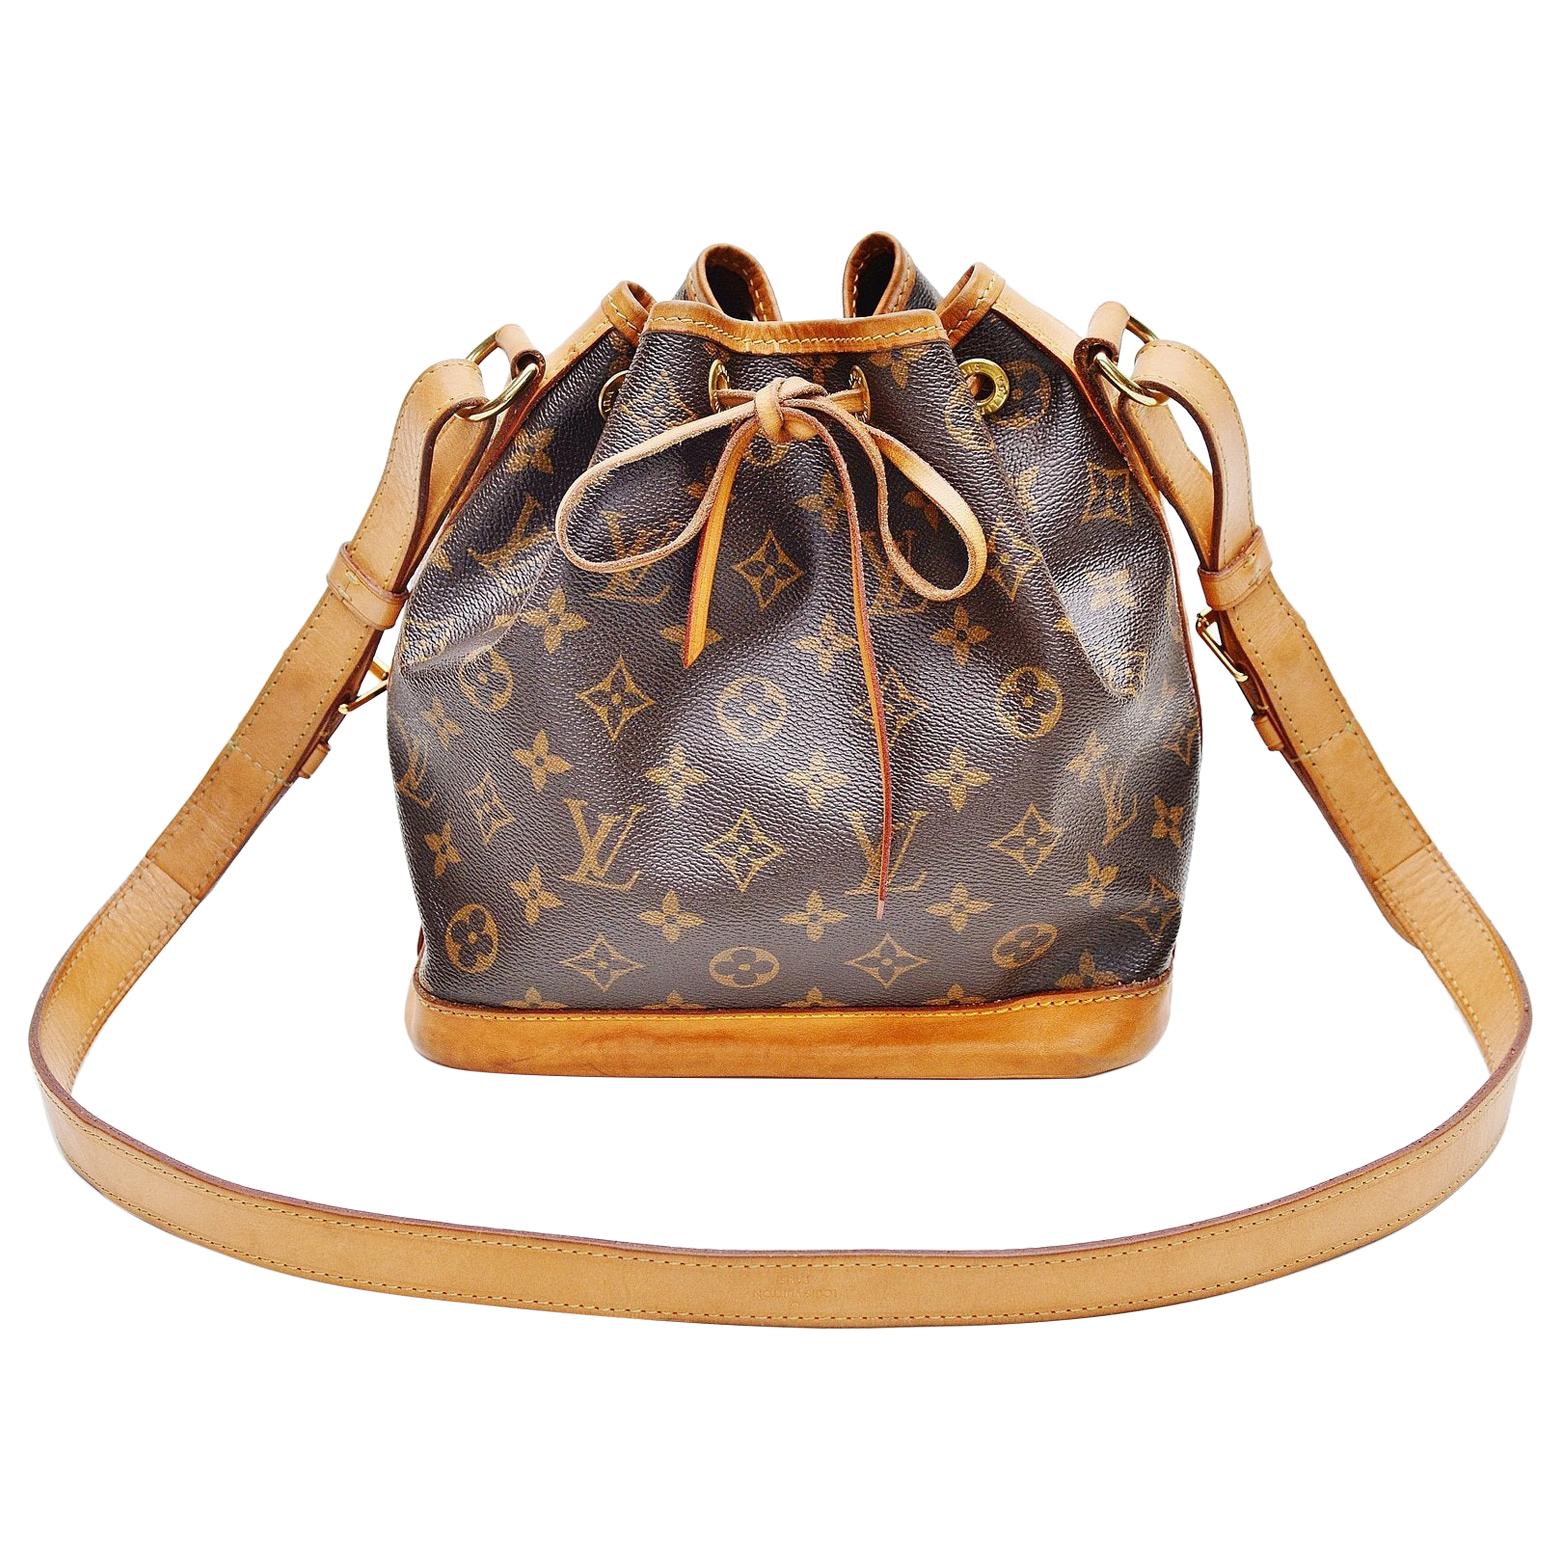 Louis Vuitton Noe BB Bag Review - Better Than the Chanel Gabrielle